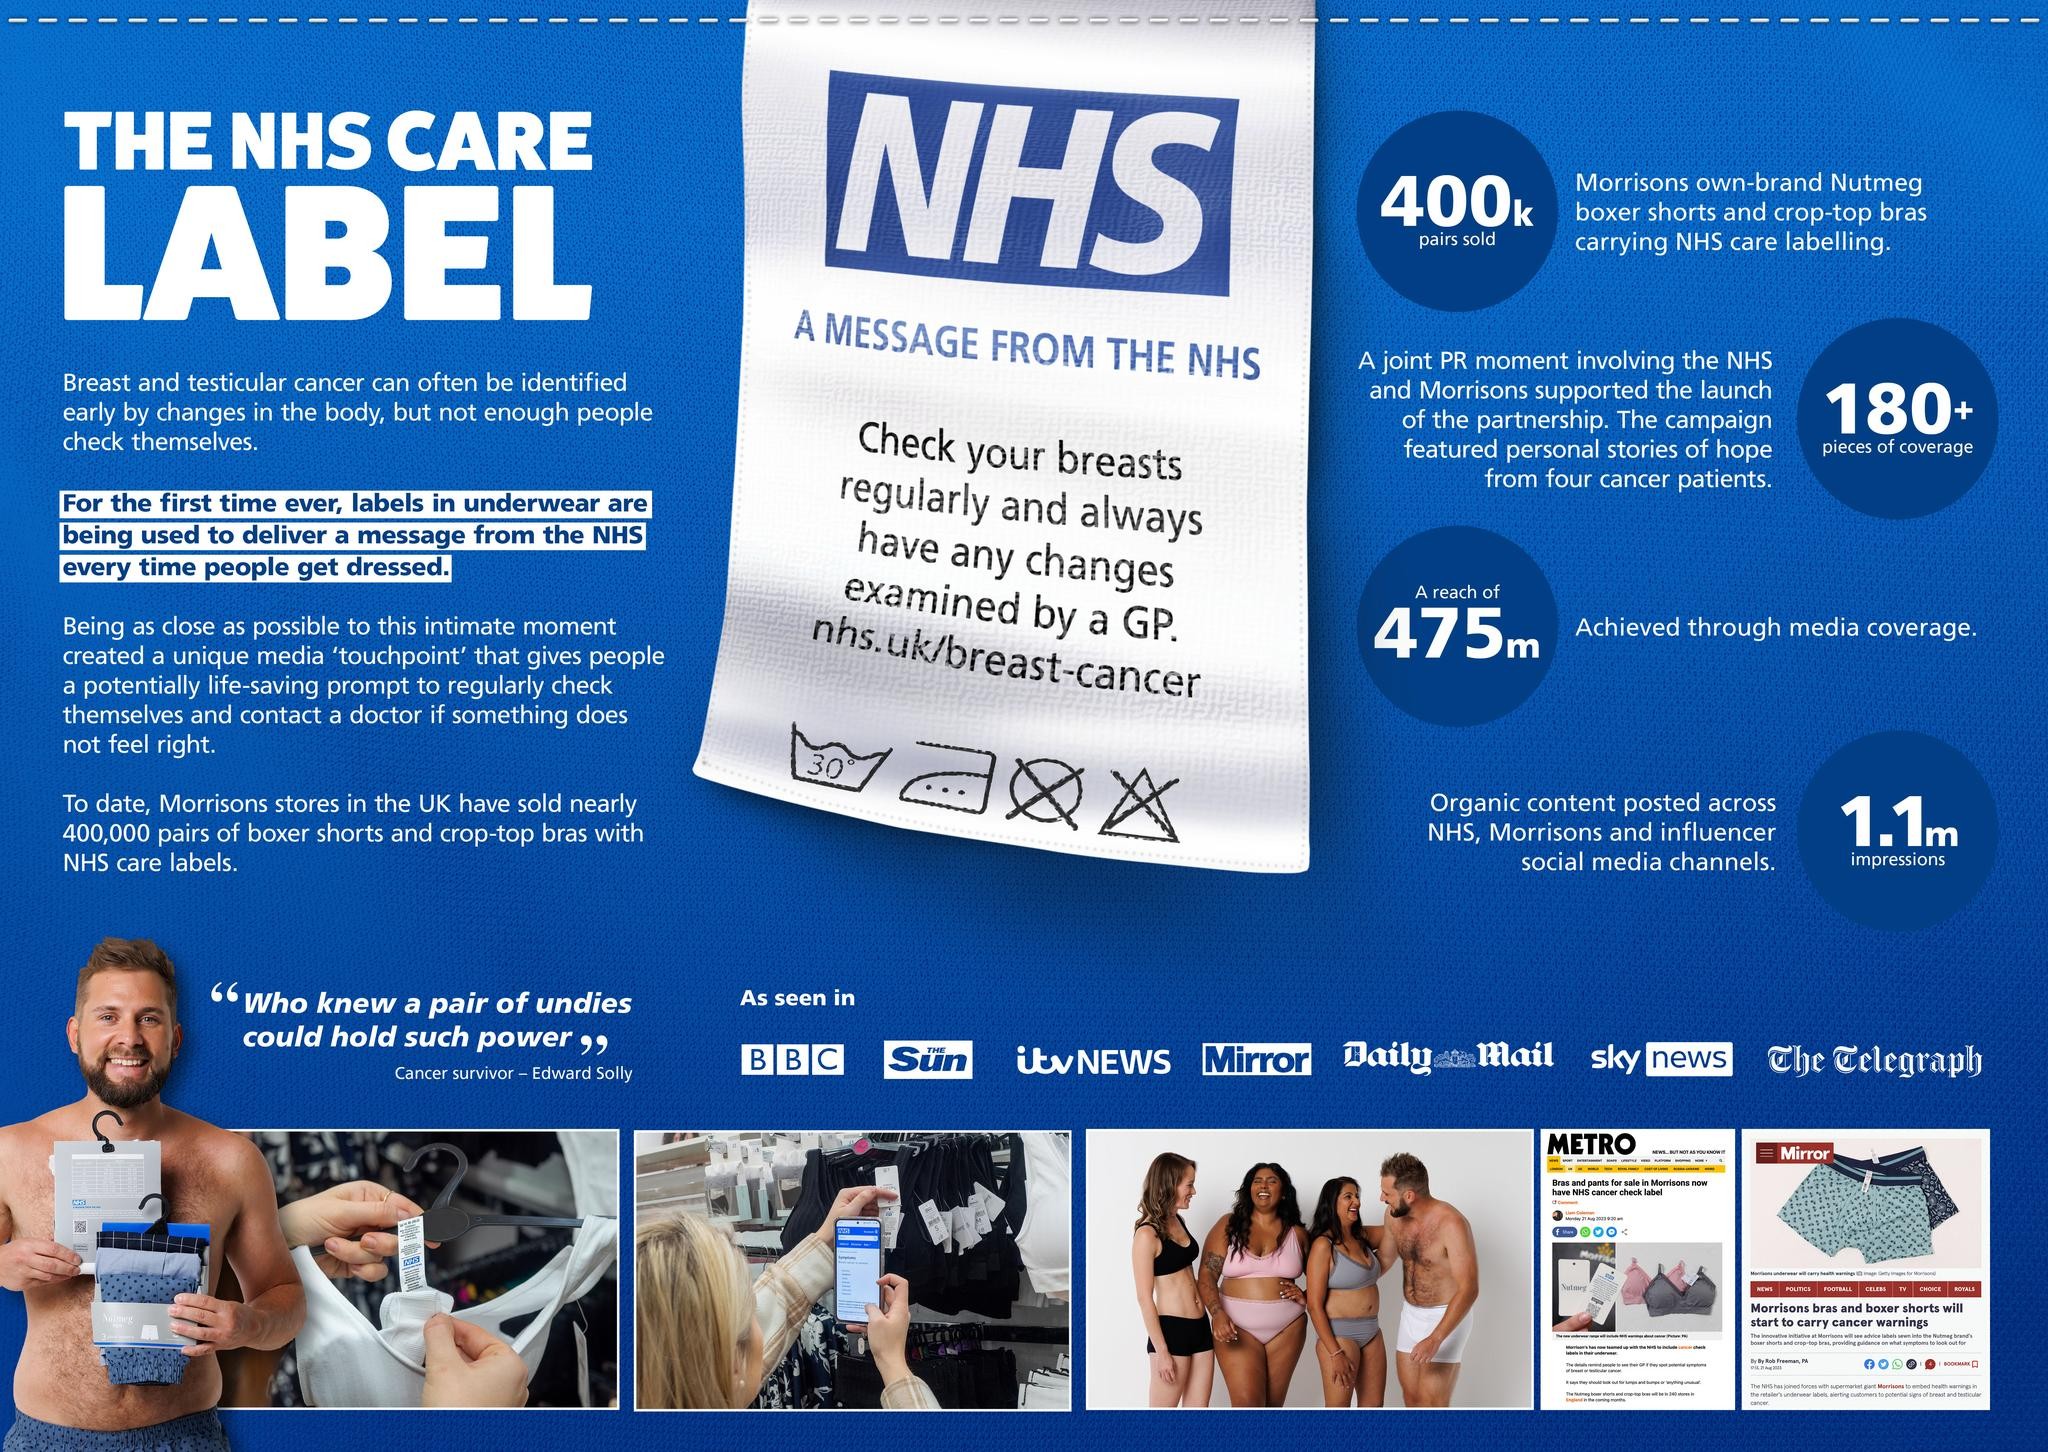 NHS care labels